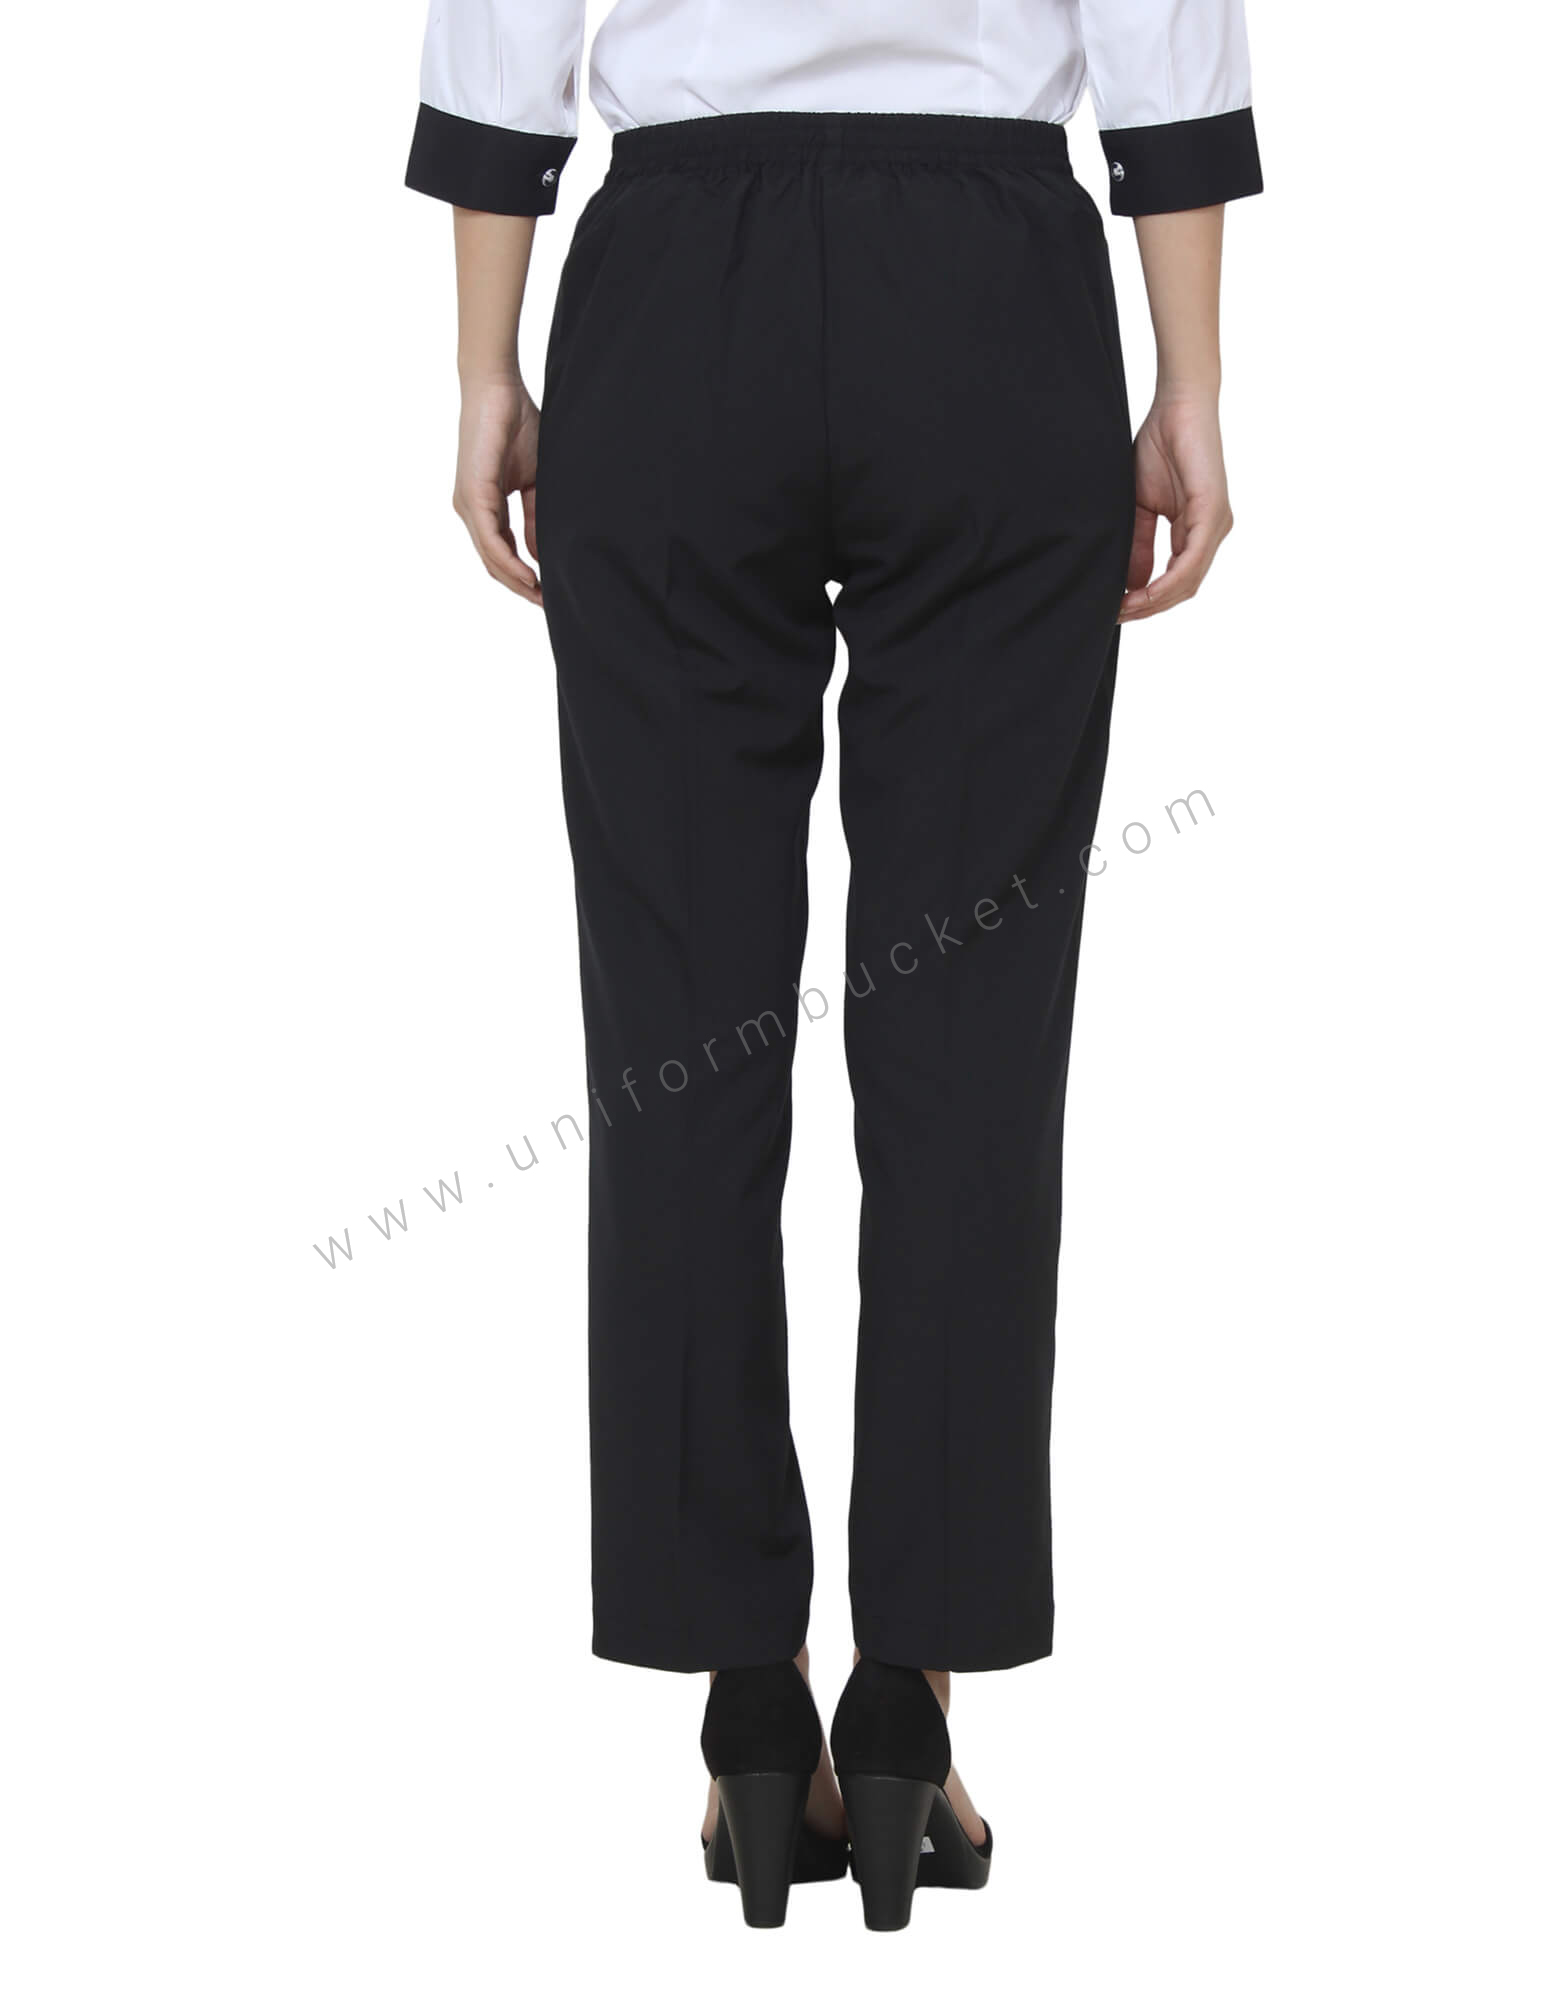 Buy Formal Black Trouser With Black Elastic For Women Online  Best Prices  in India  Uniform Bucket  UNIFORM BUCKET